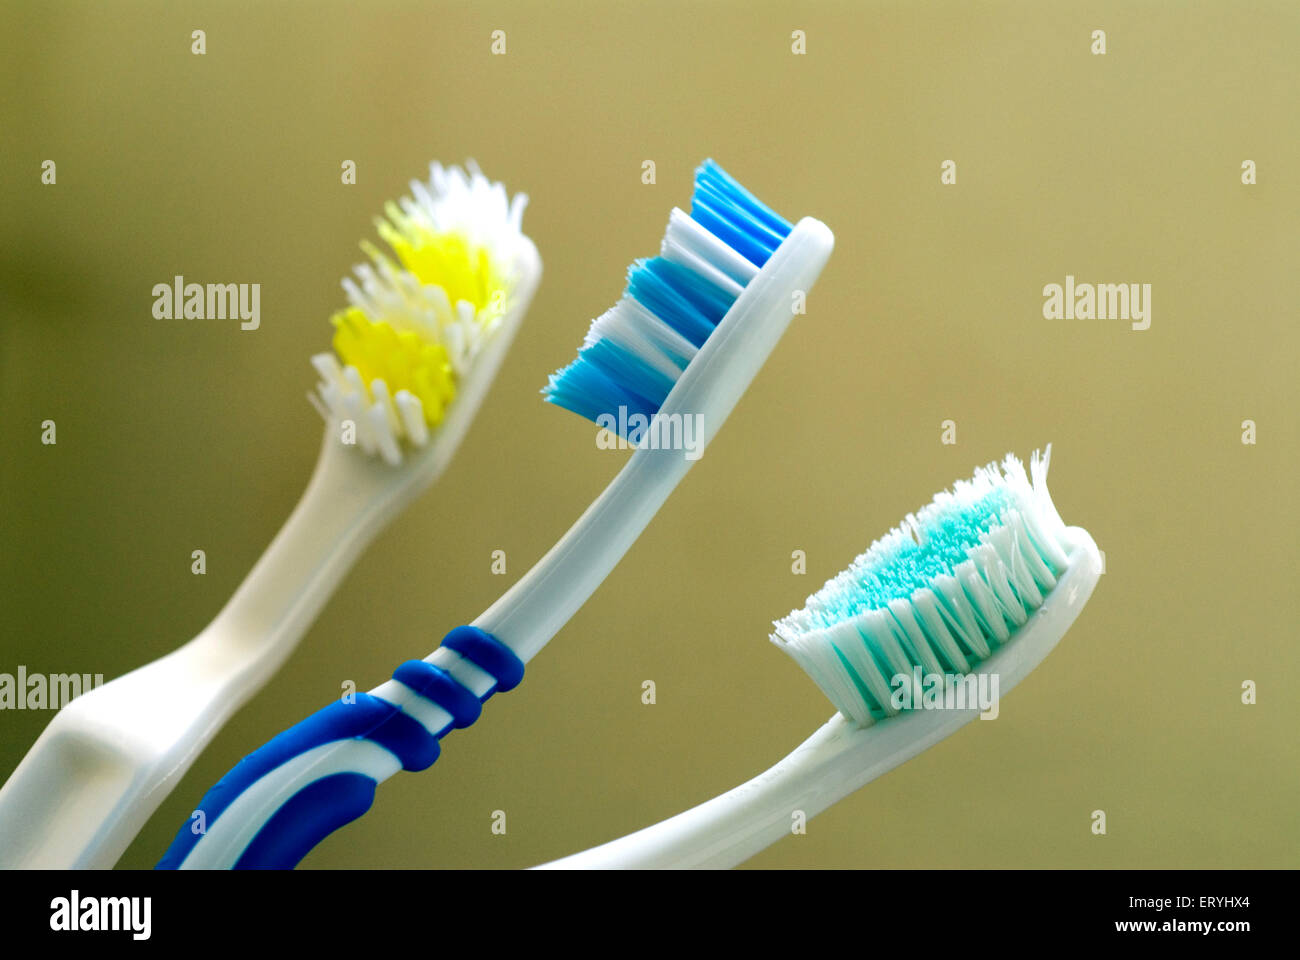 Plastic toothbrush used Stock Photo - Alamy